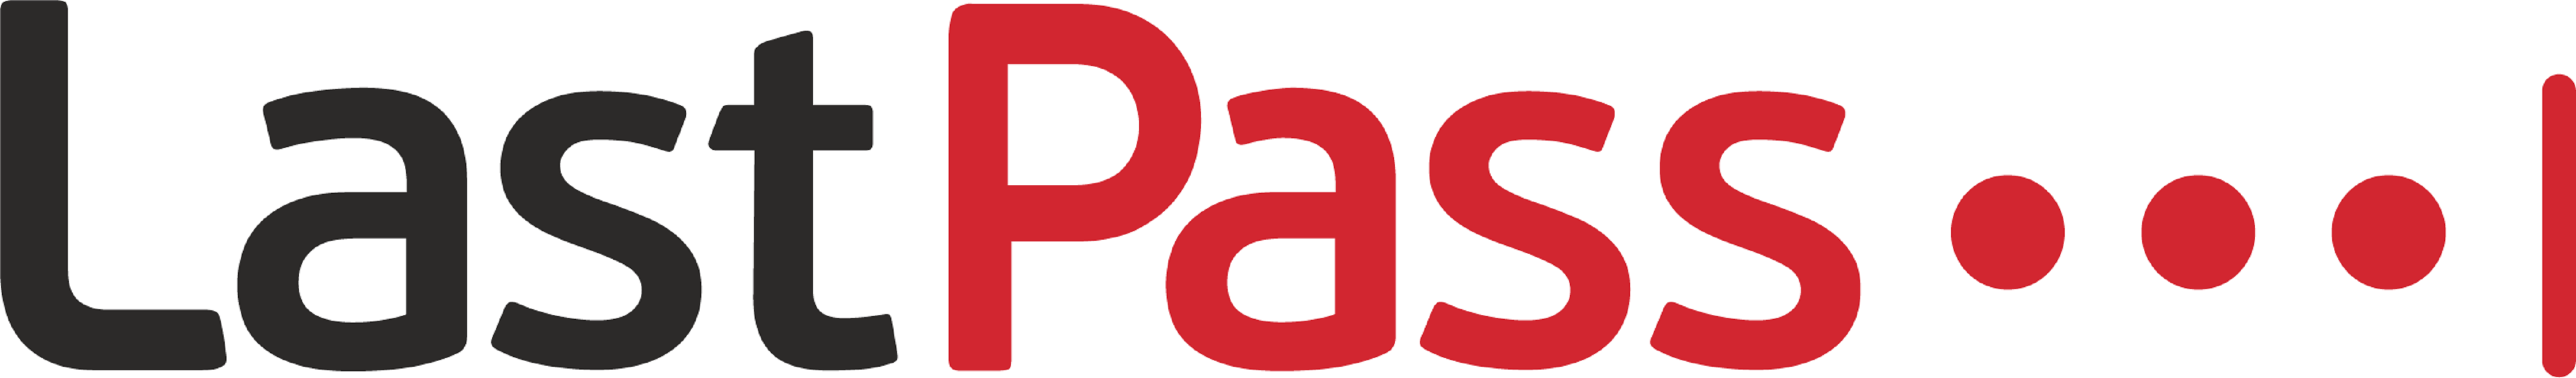 LastPass - Best overall password manager